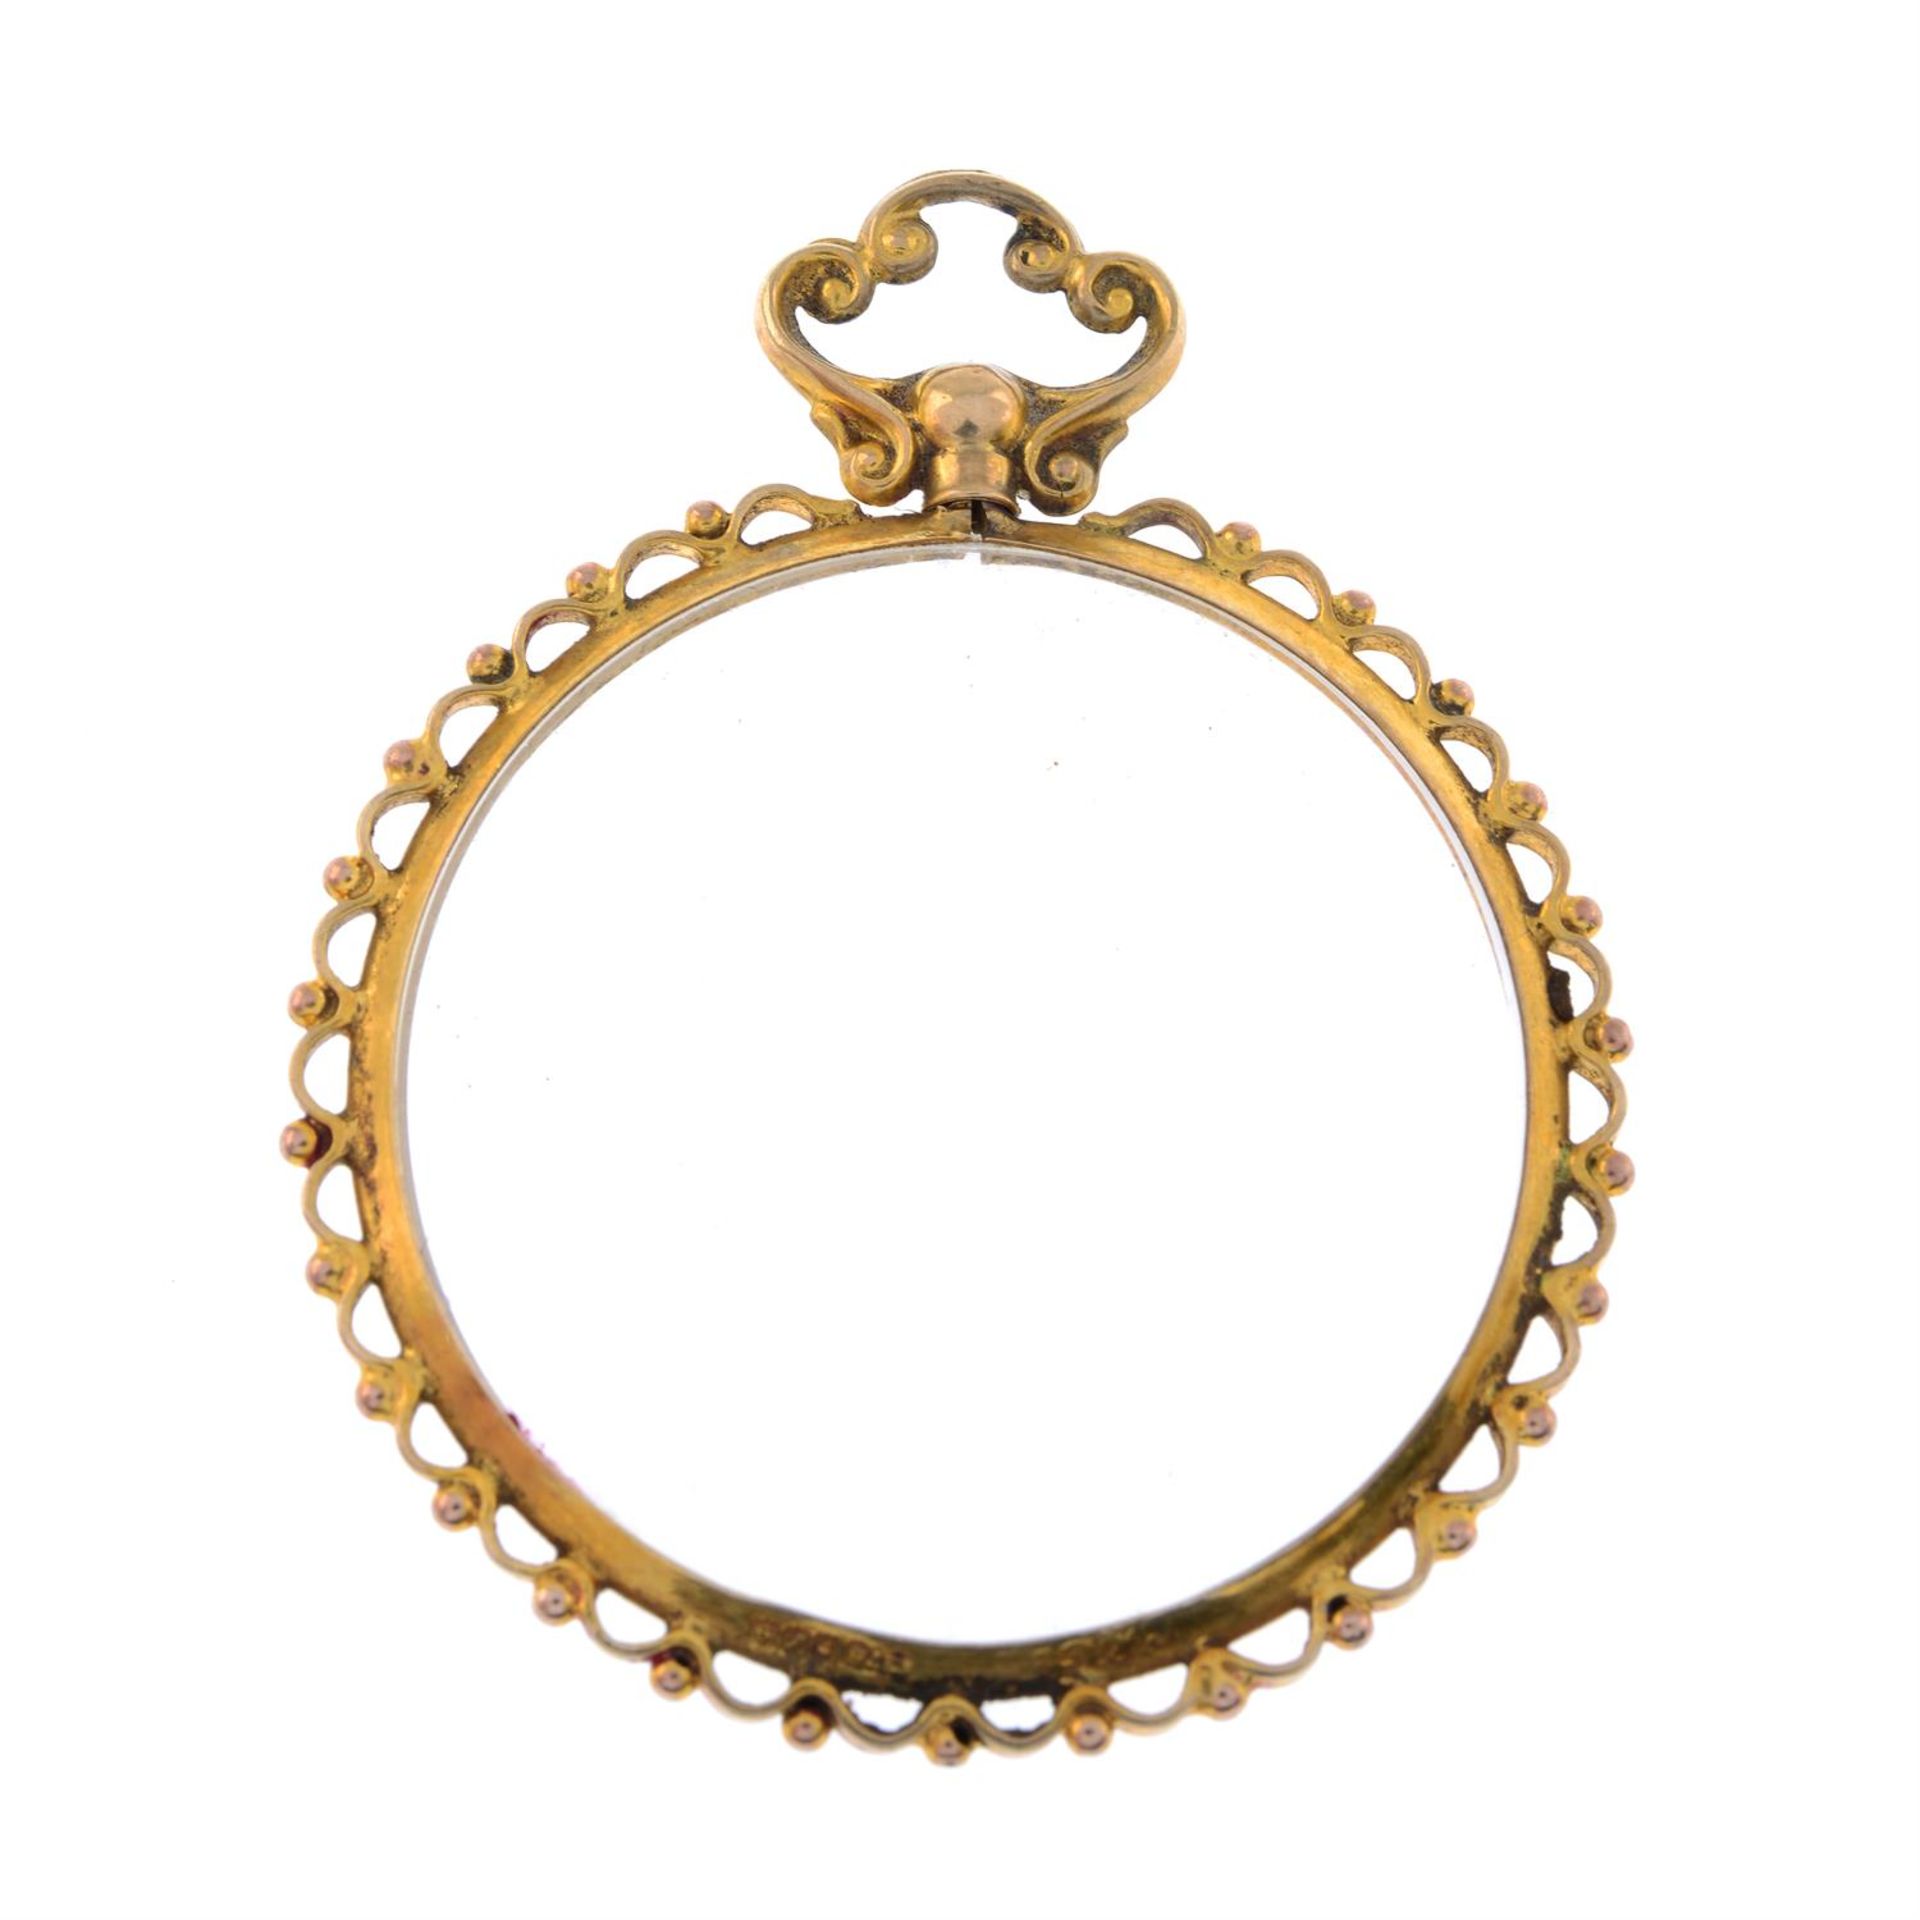 Early 20th century 9ct gold locket pendant